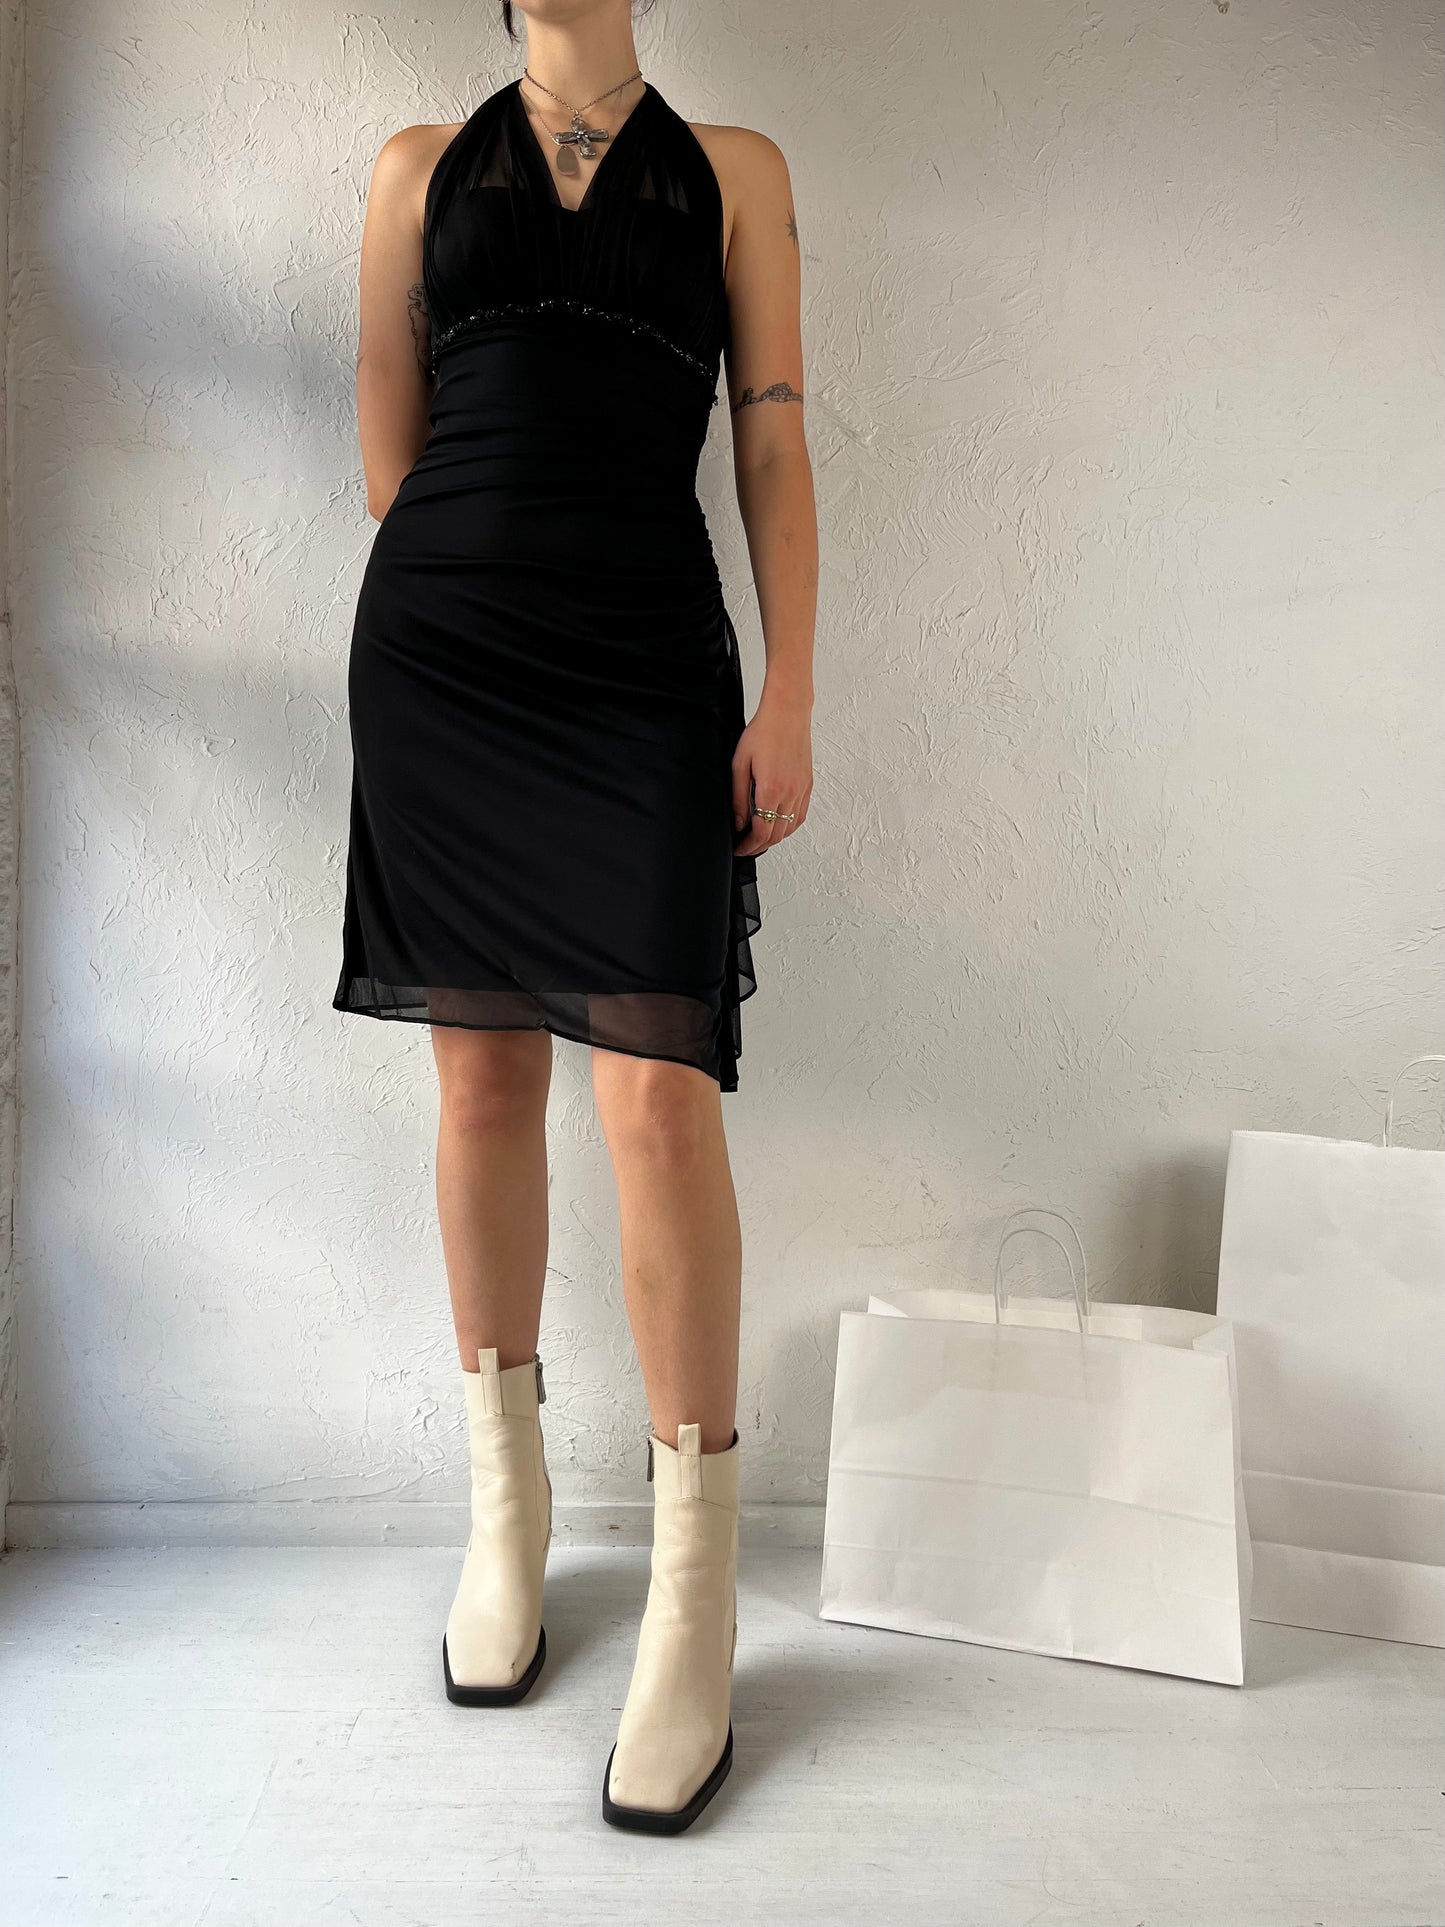 90s 'Blondie Nites' Short Black Halter Evening Dress / Small